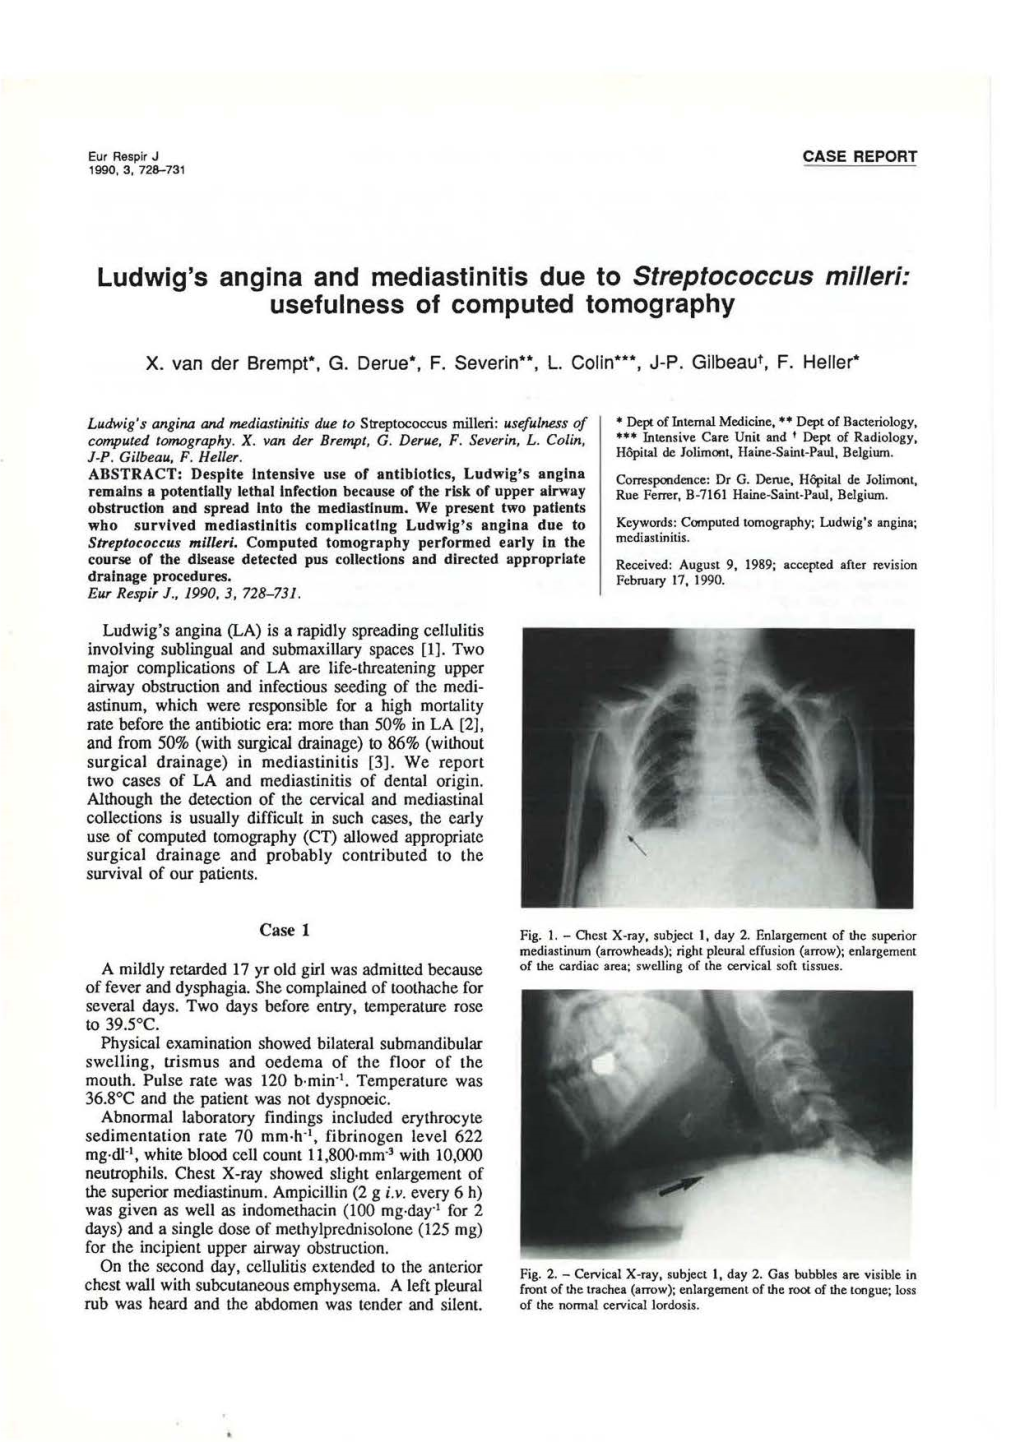 Ludwig's Angina and Mediastinitis Due to Streptococcus Milleri: Usefulness of Computed Tomography